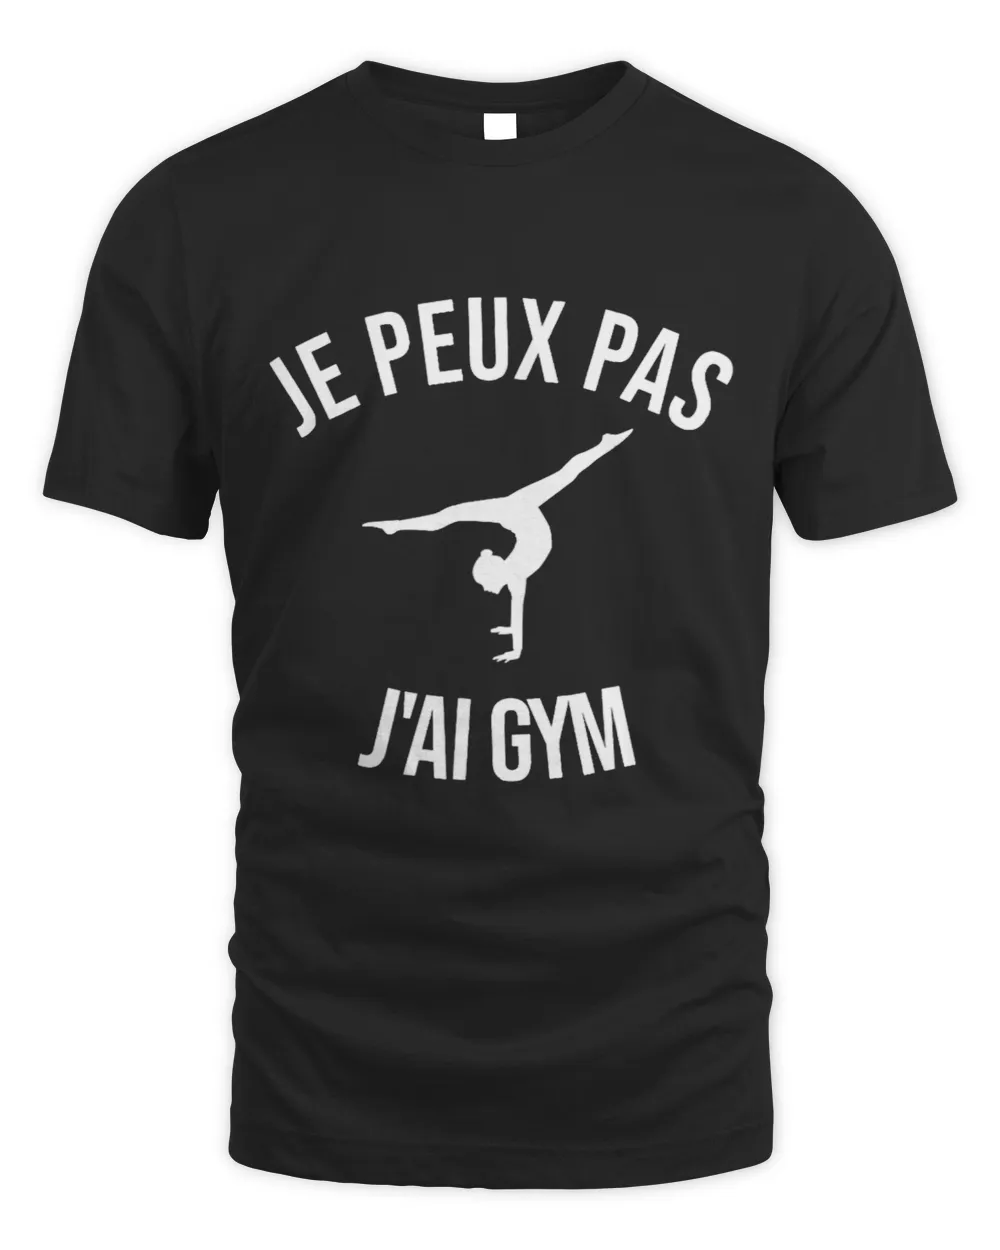 Je peux pas jai gym for gymnasts with a sense of humor